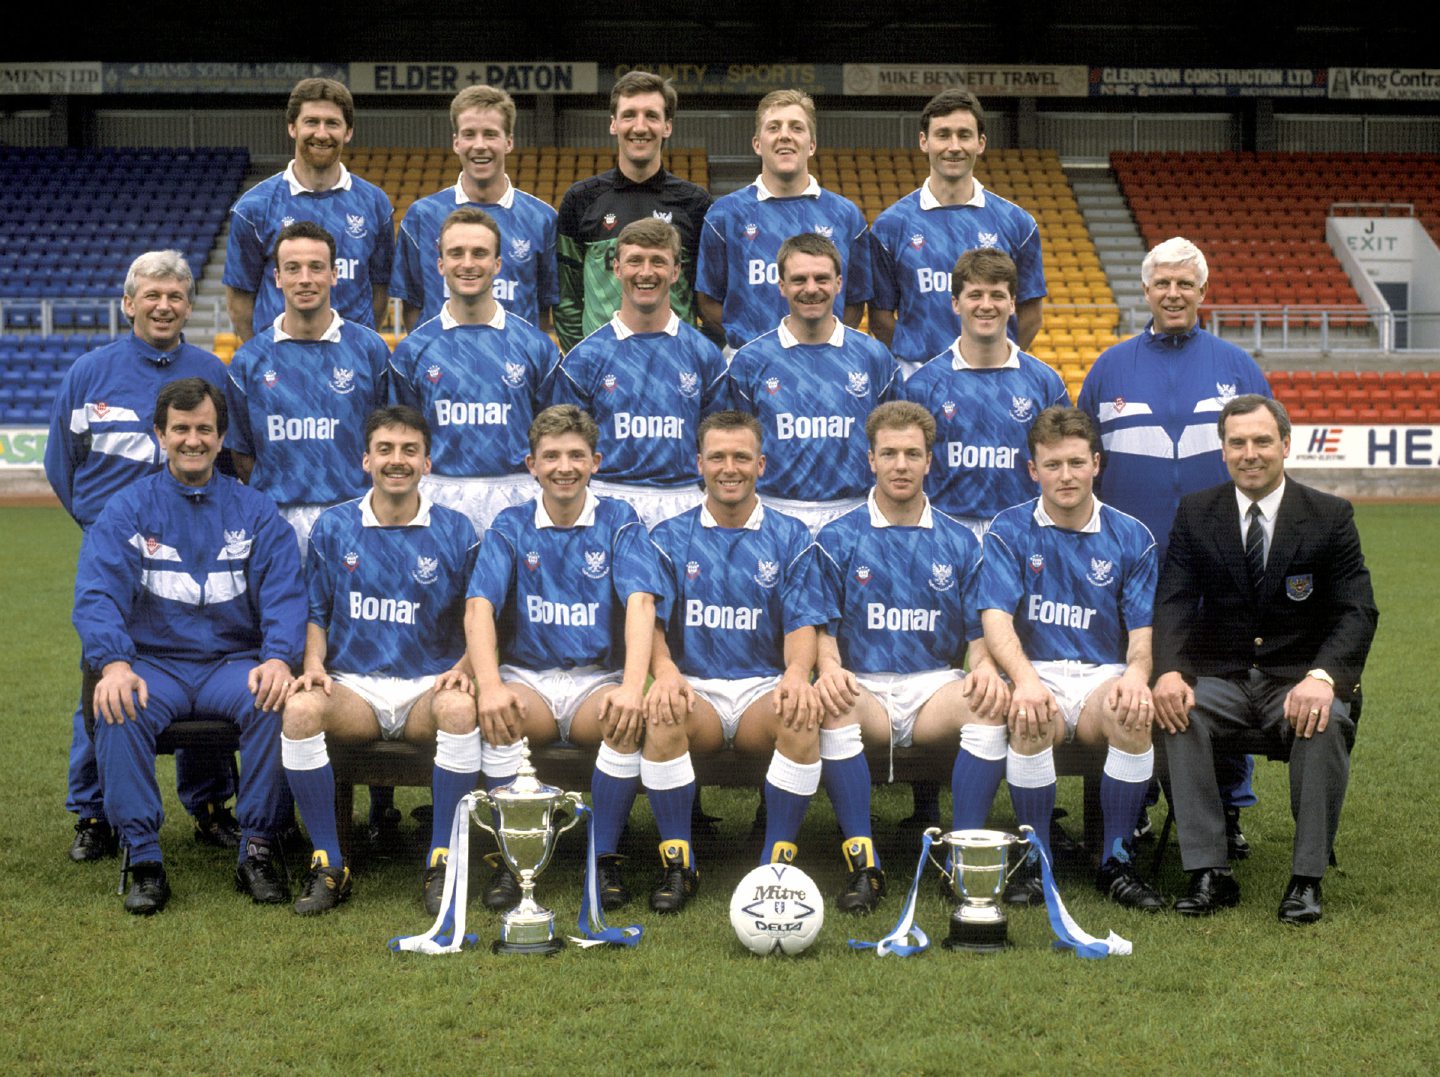 St Johnston team B &amp; Q League 1st Division Champions 1989/1990.